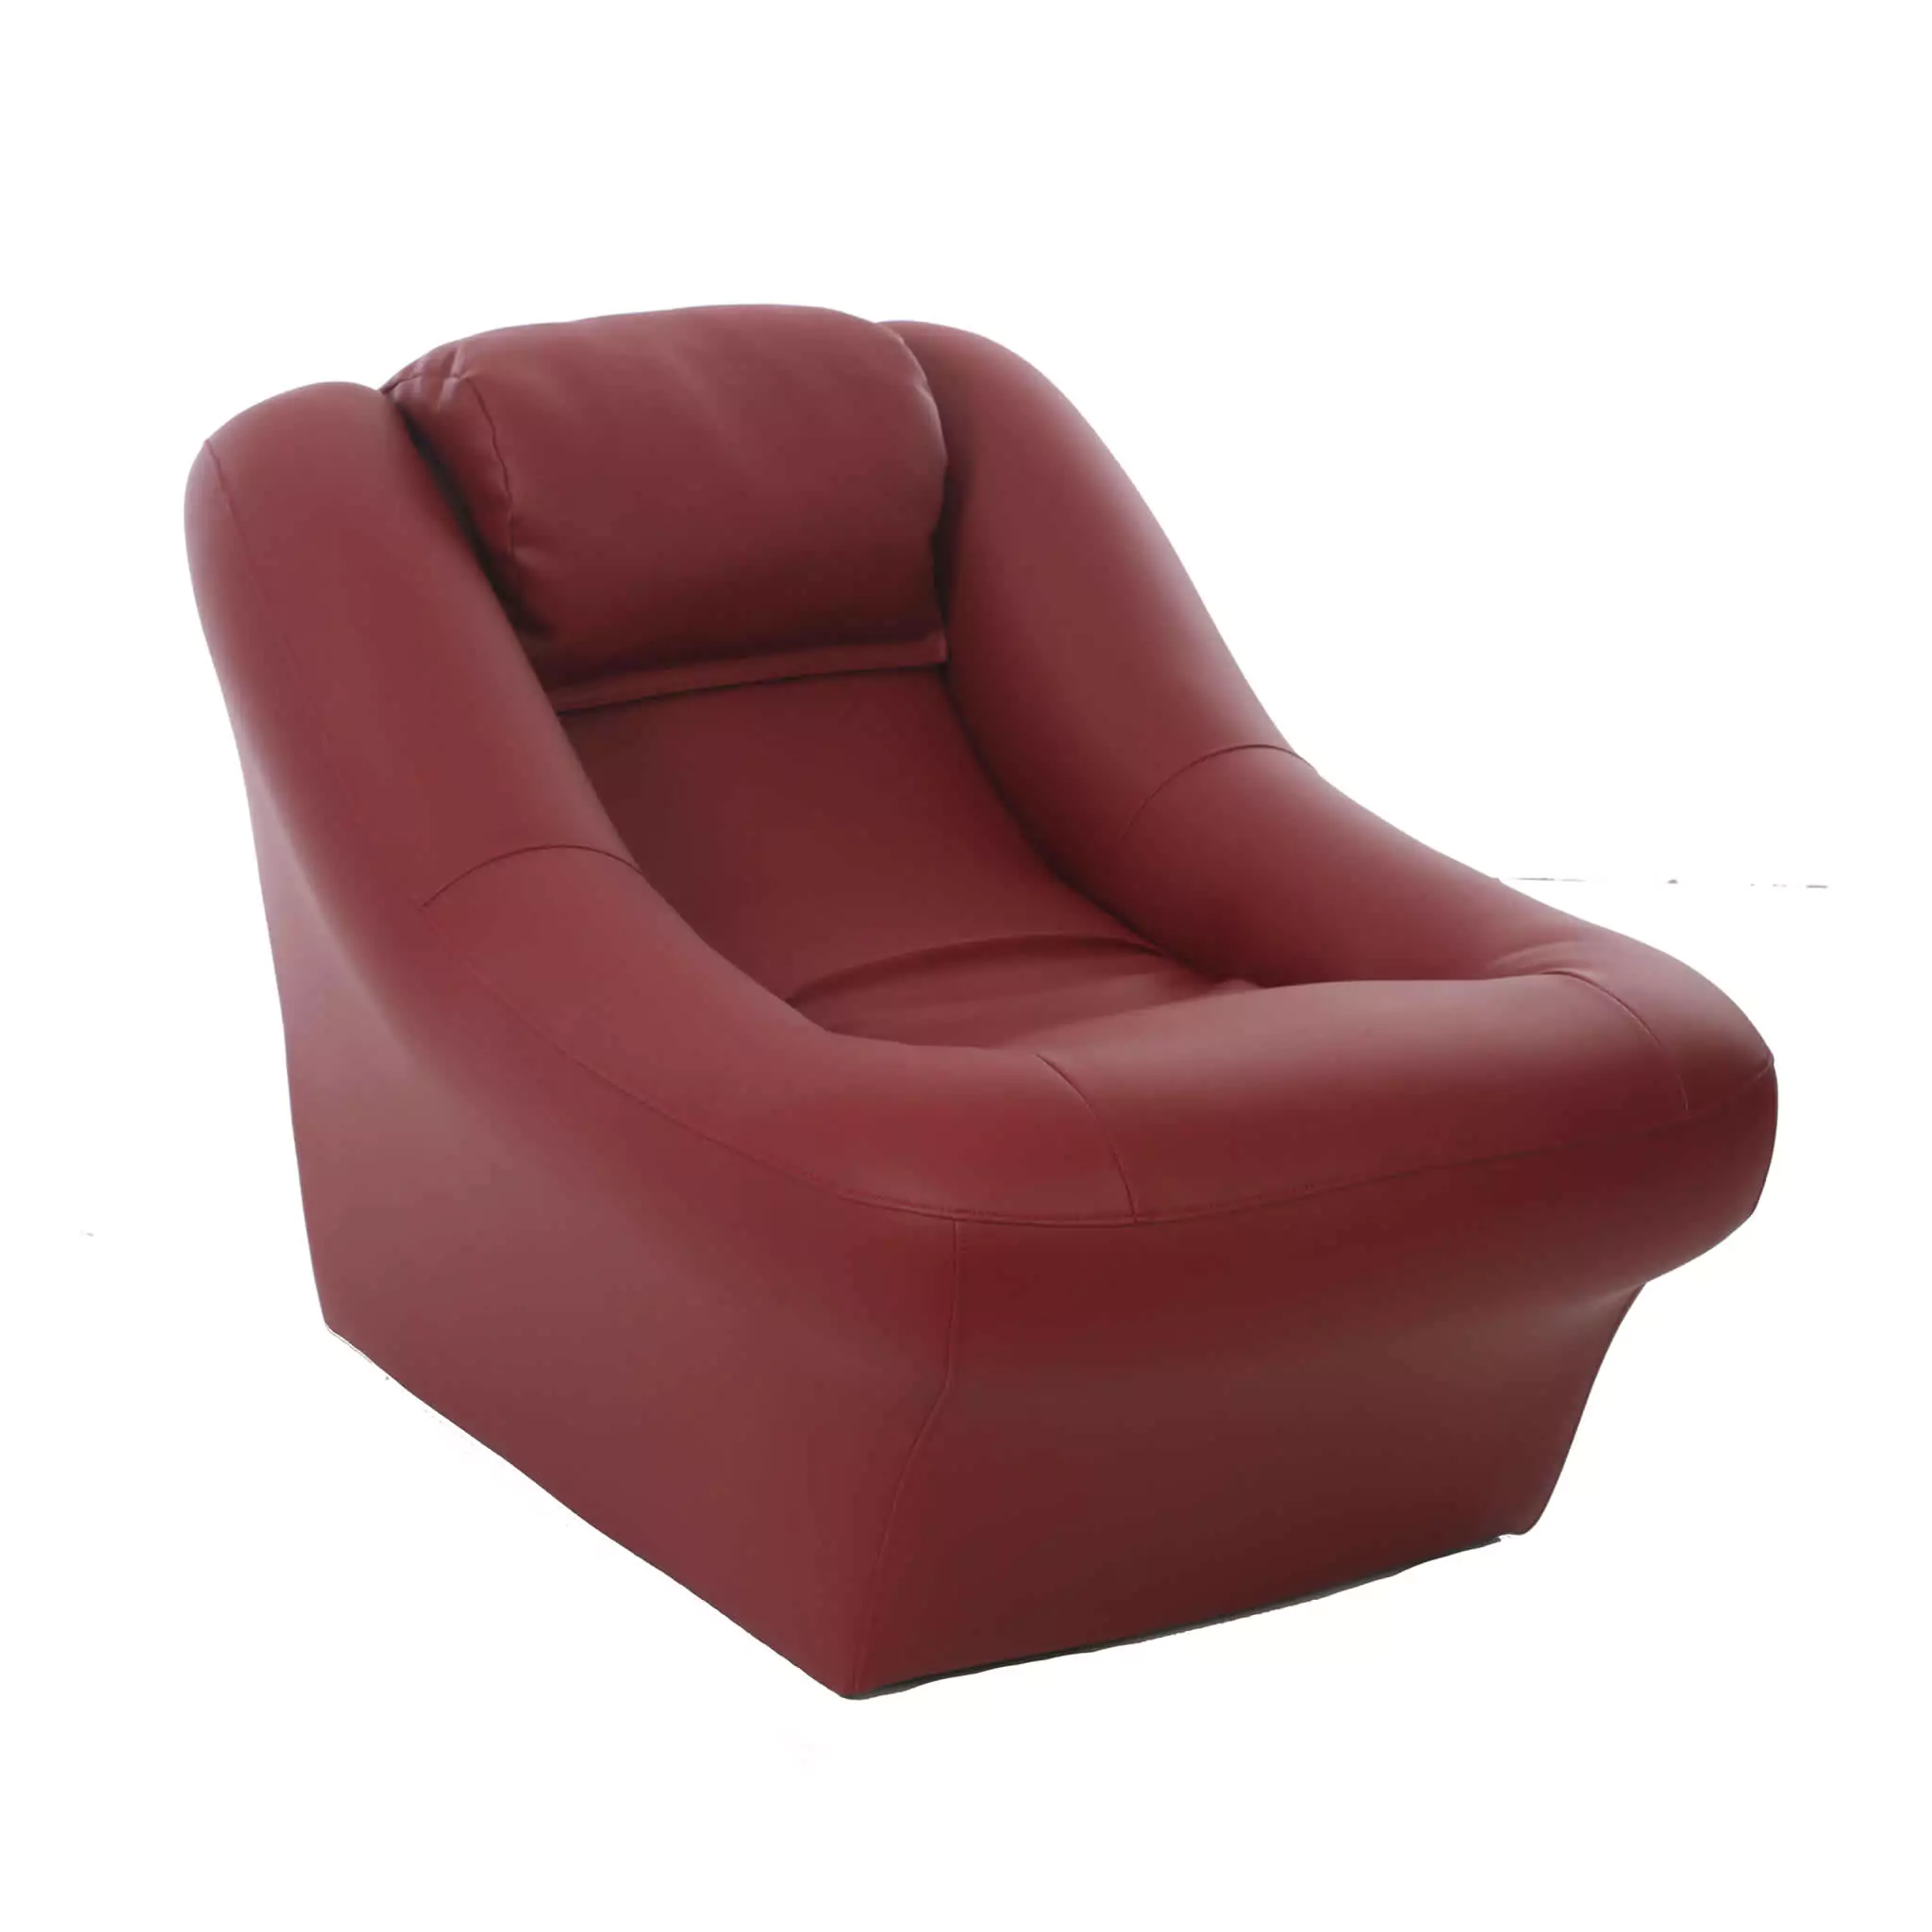 Seat Model: RED COMFORT